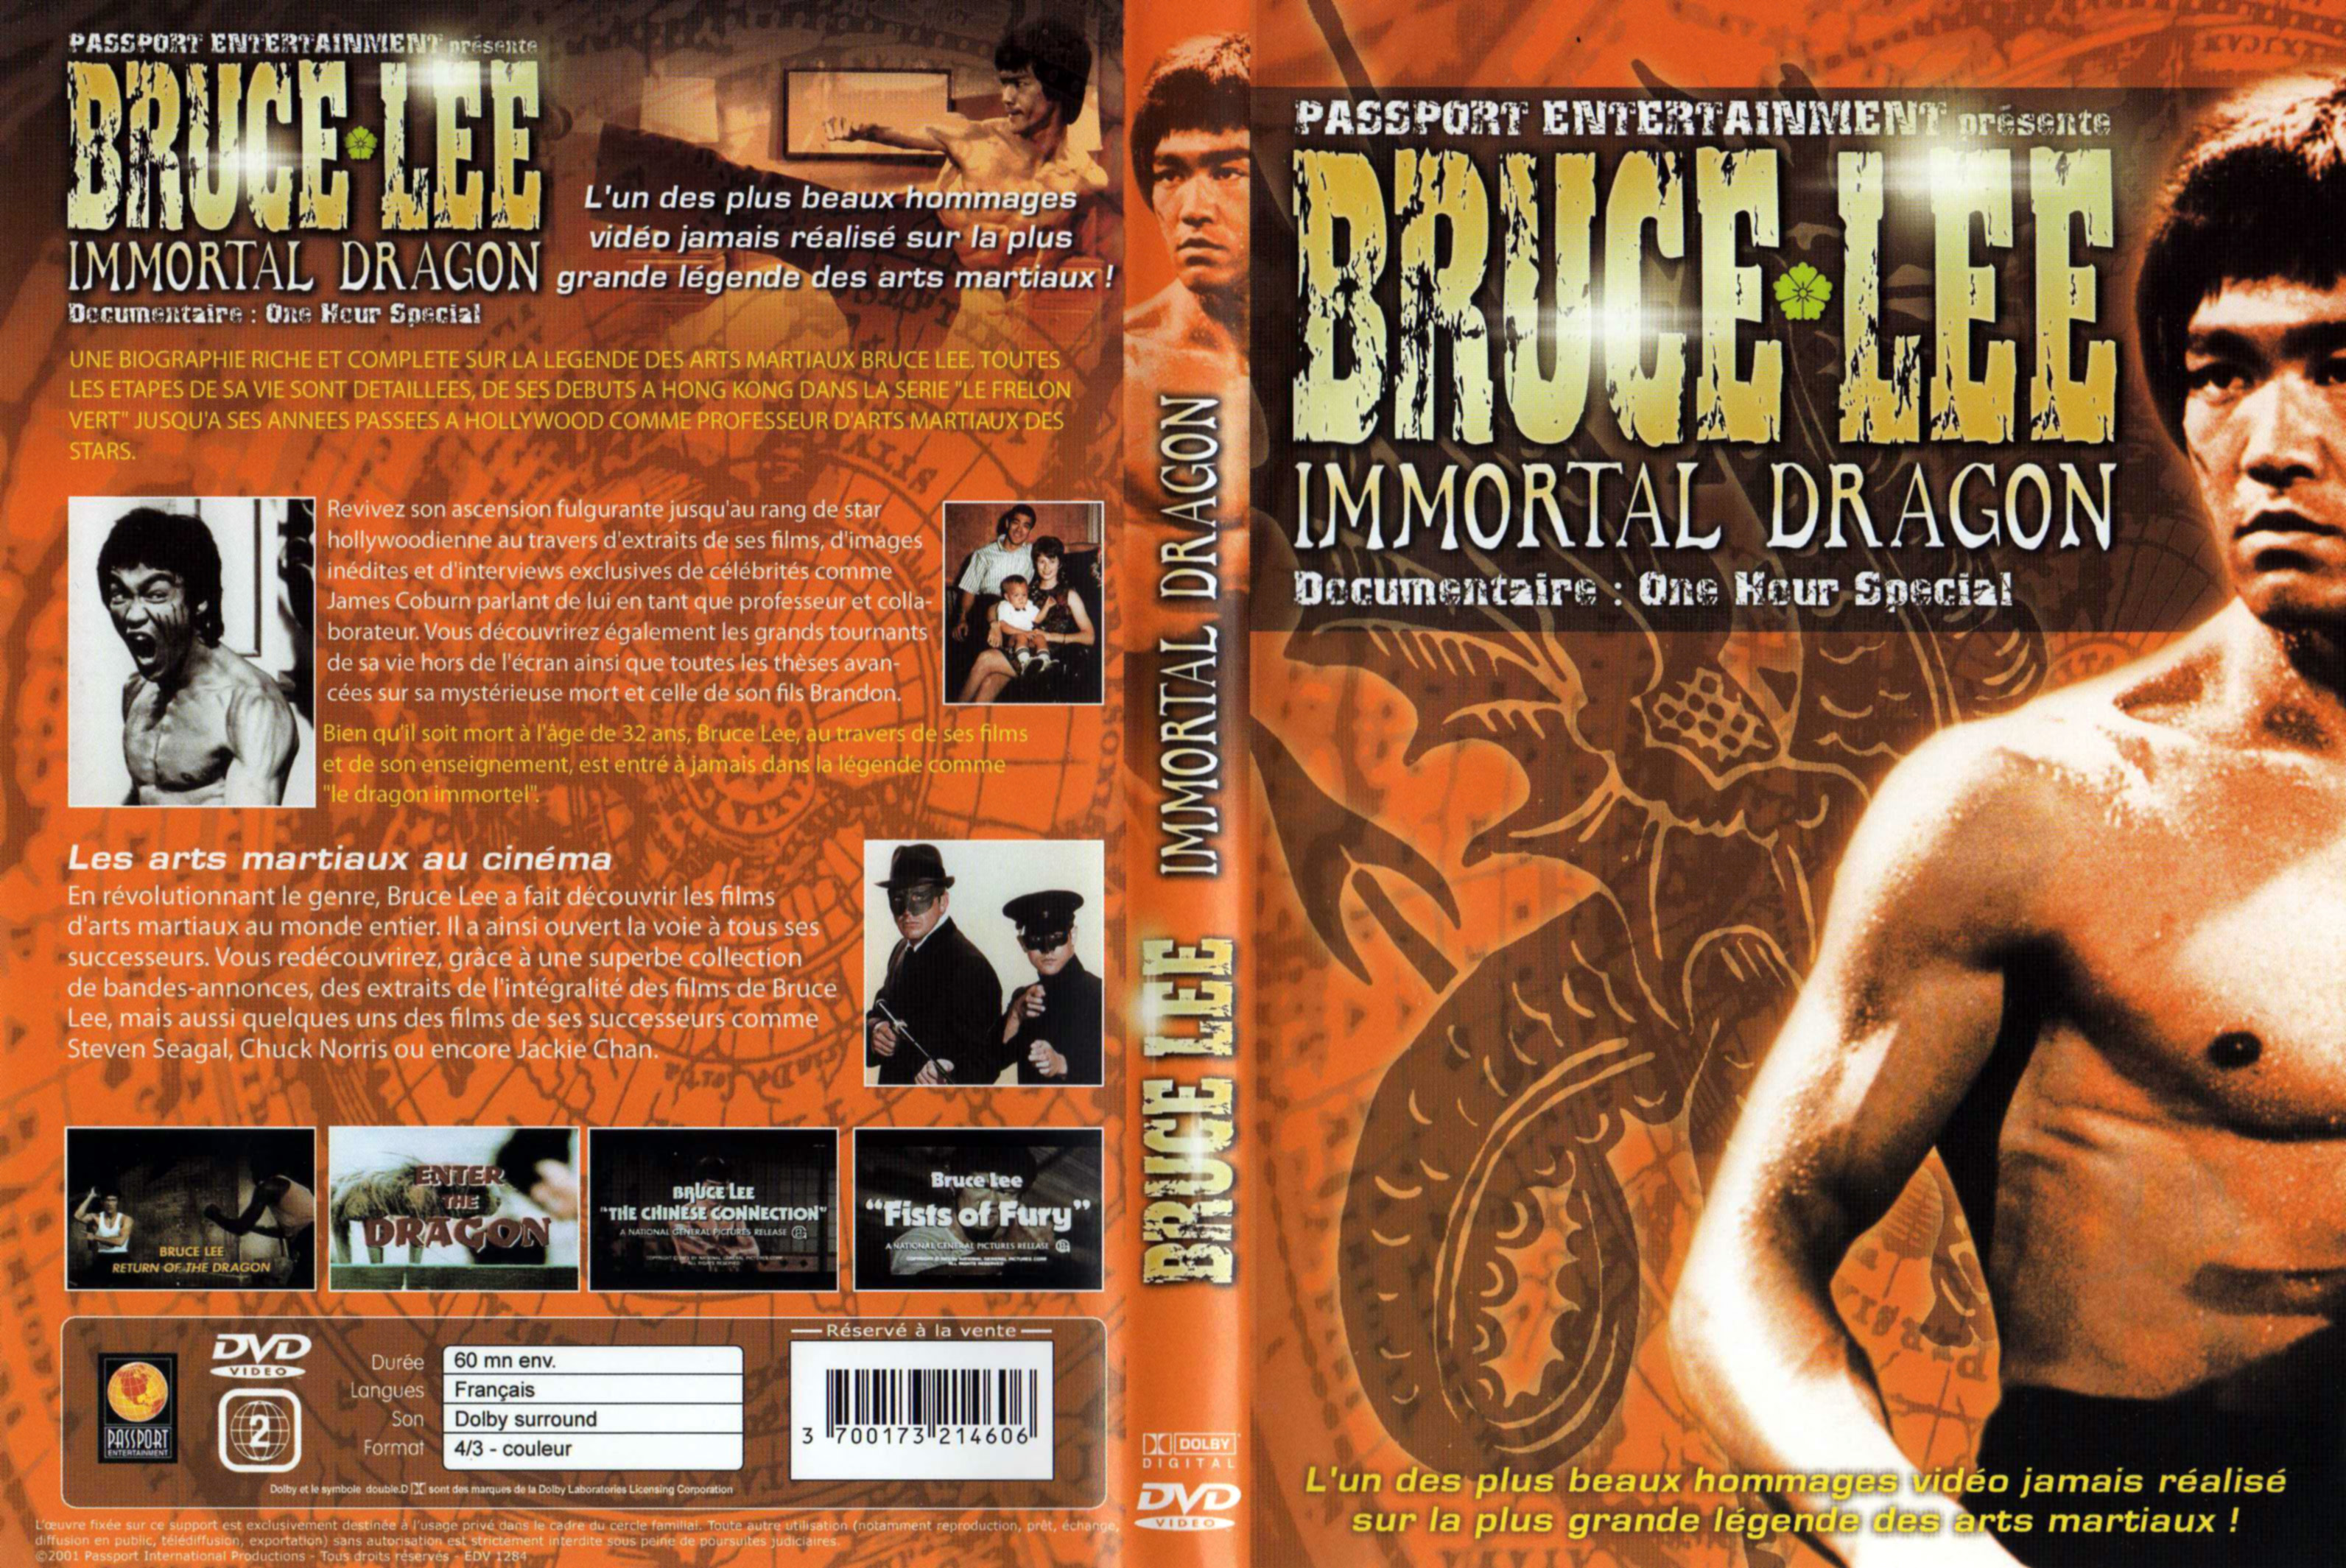 Jaquette DVD Bruce Lee - Immortal dragon v2